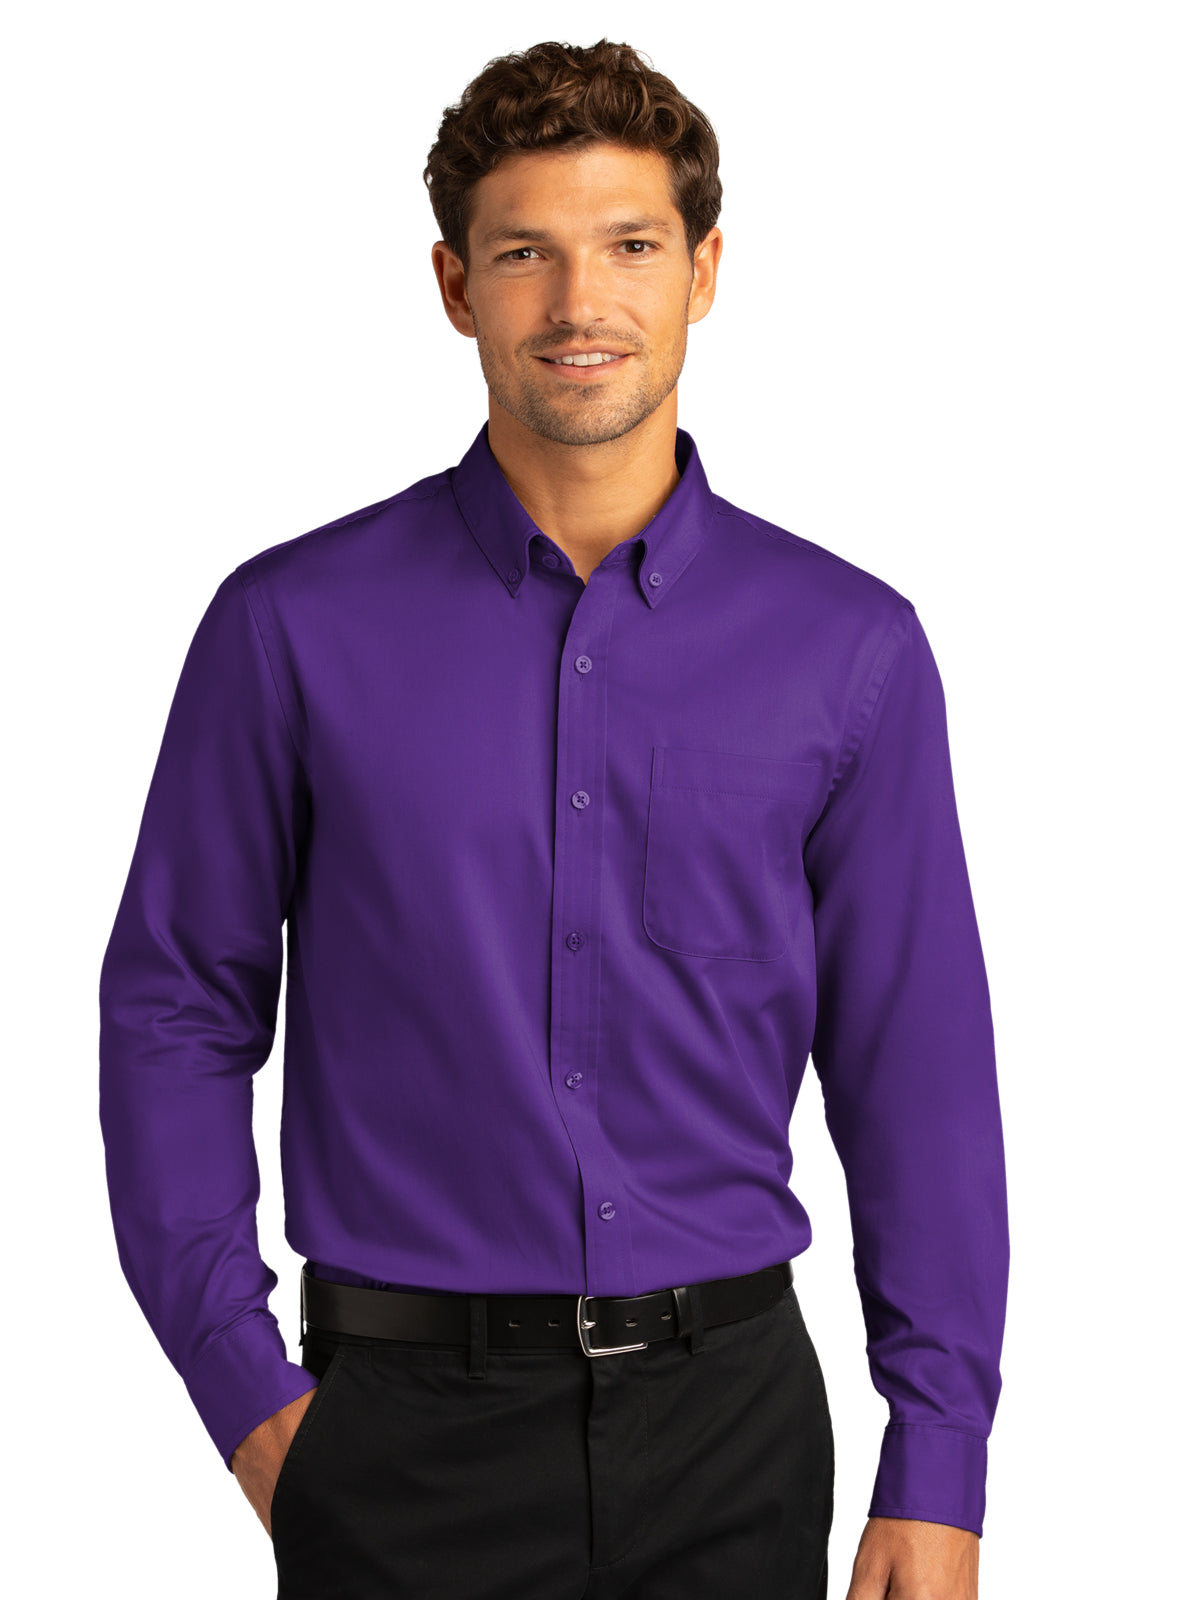 Long Sleeve Button Up Performance Shirt - W808 - Purple